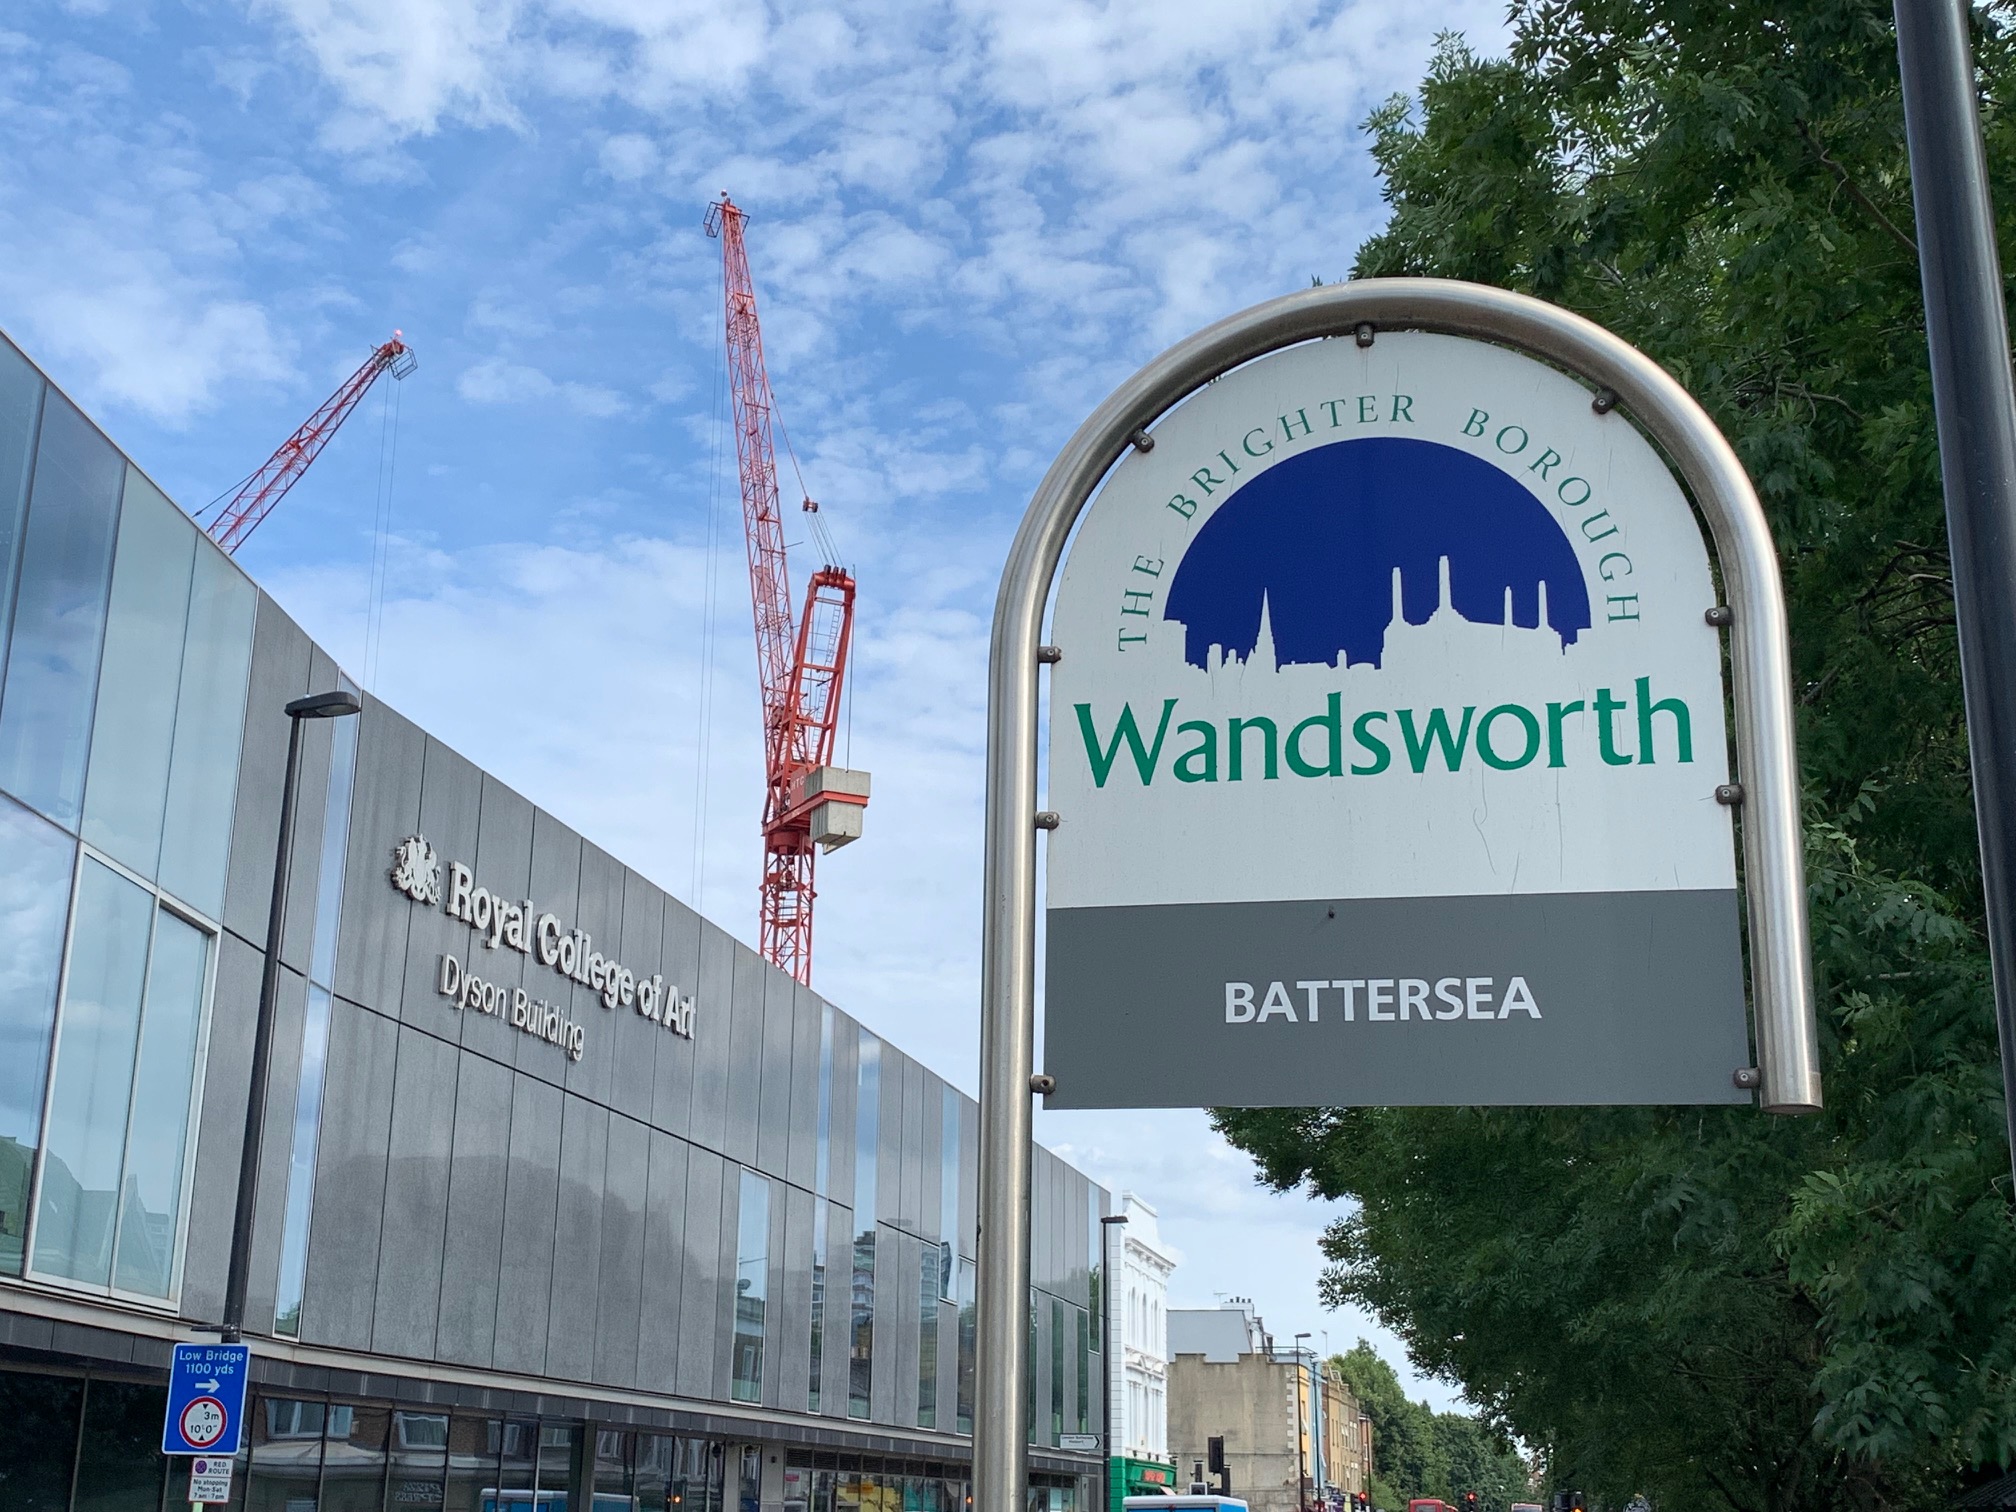 Wandsworth sign Battersea - Royal College of Art